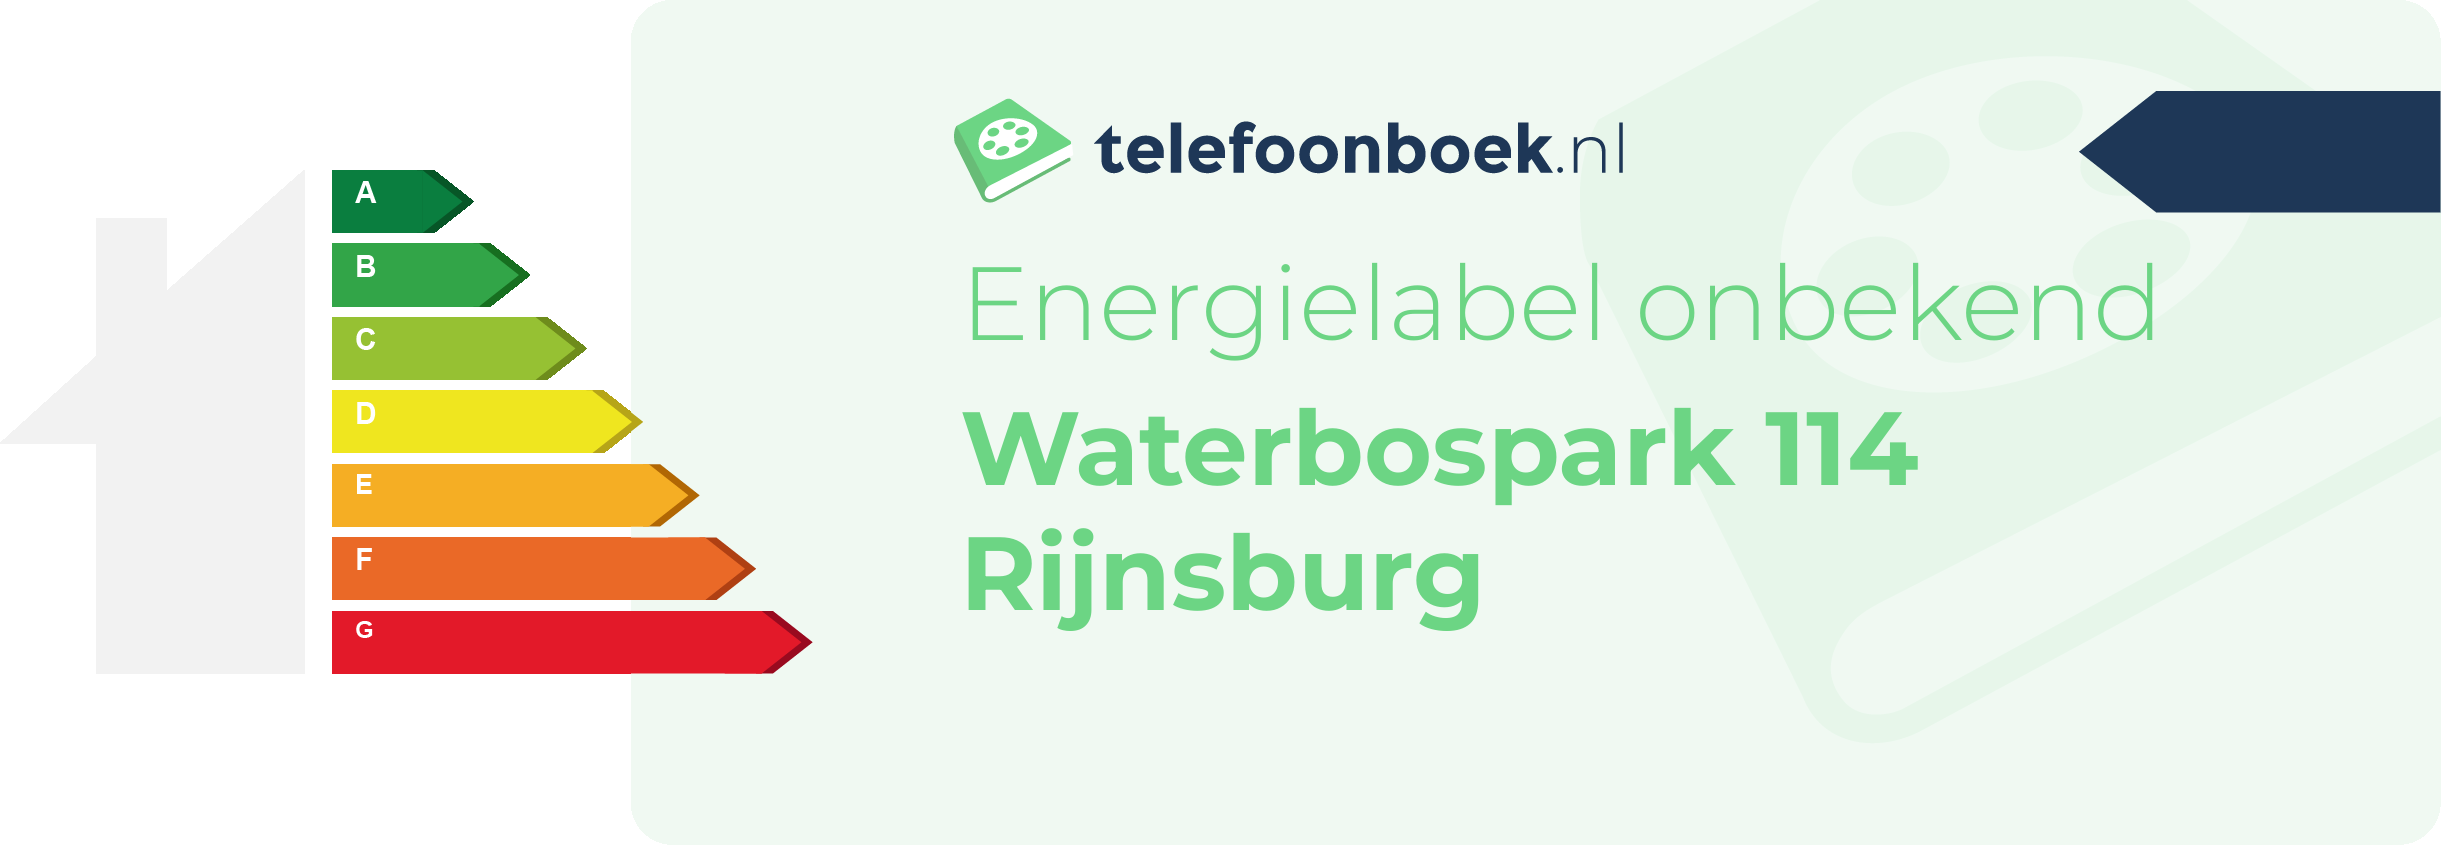 Energielabel Waterbospark 114 Rijnsburg